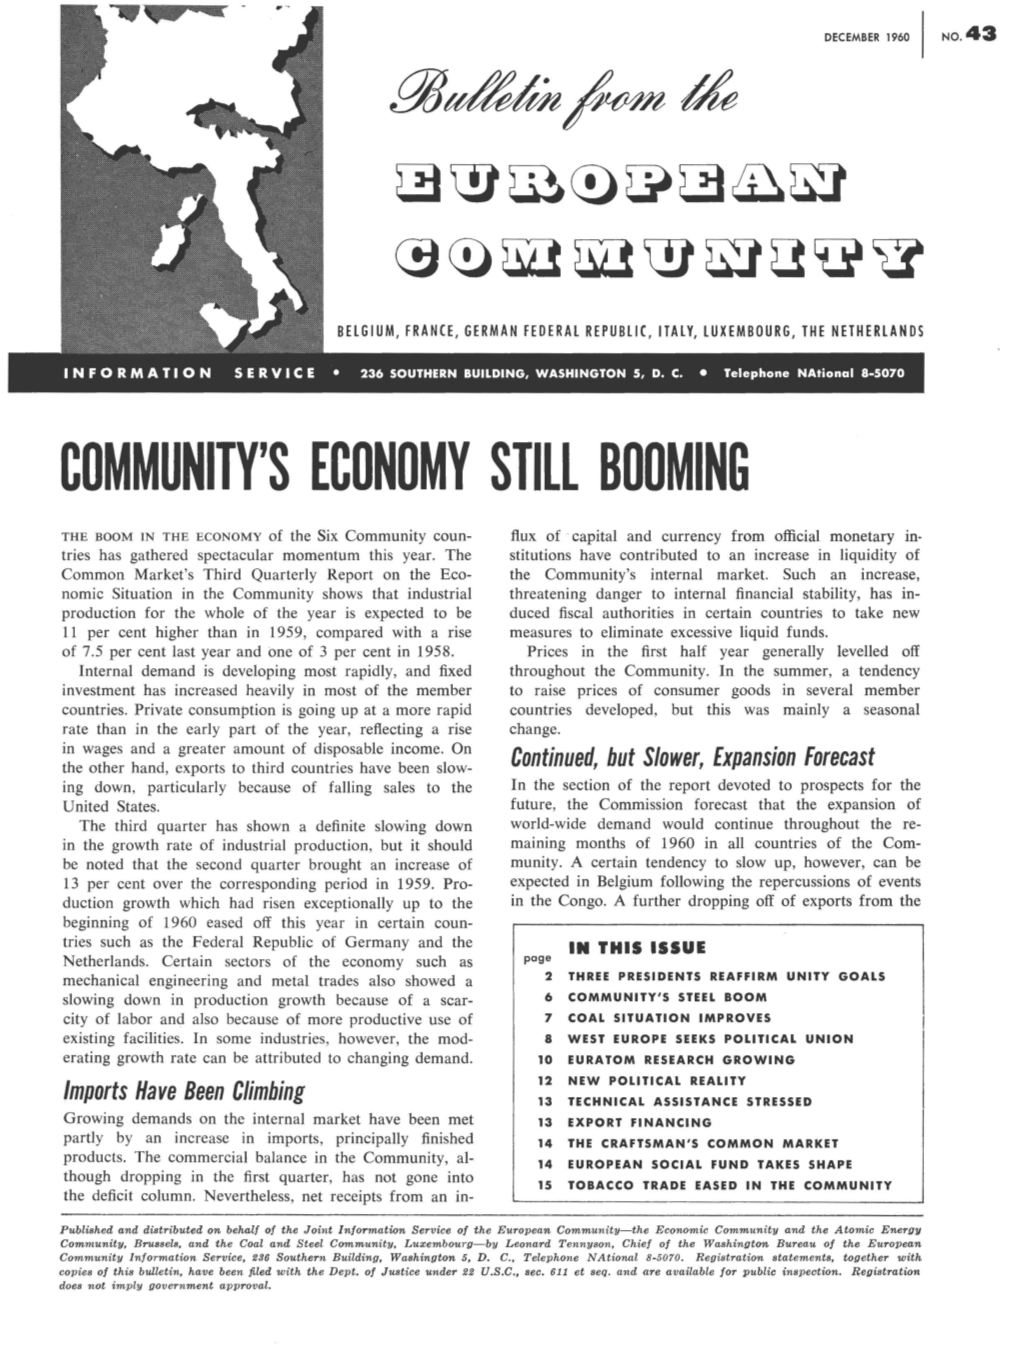 Community's Economy Still Booming